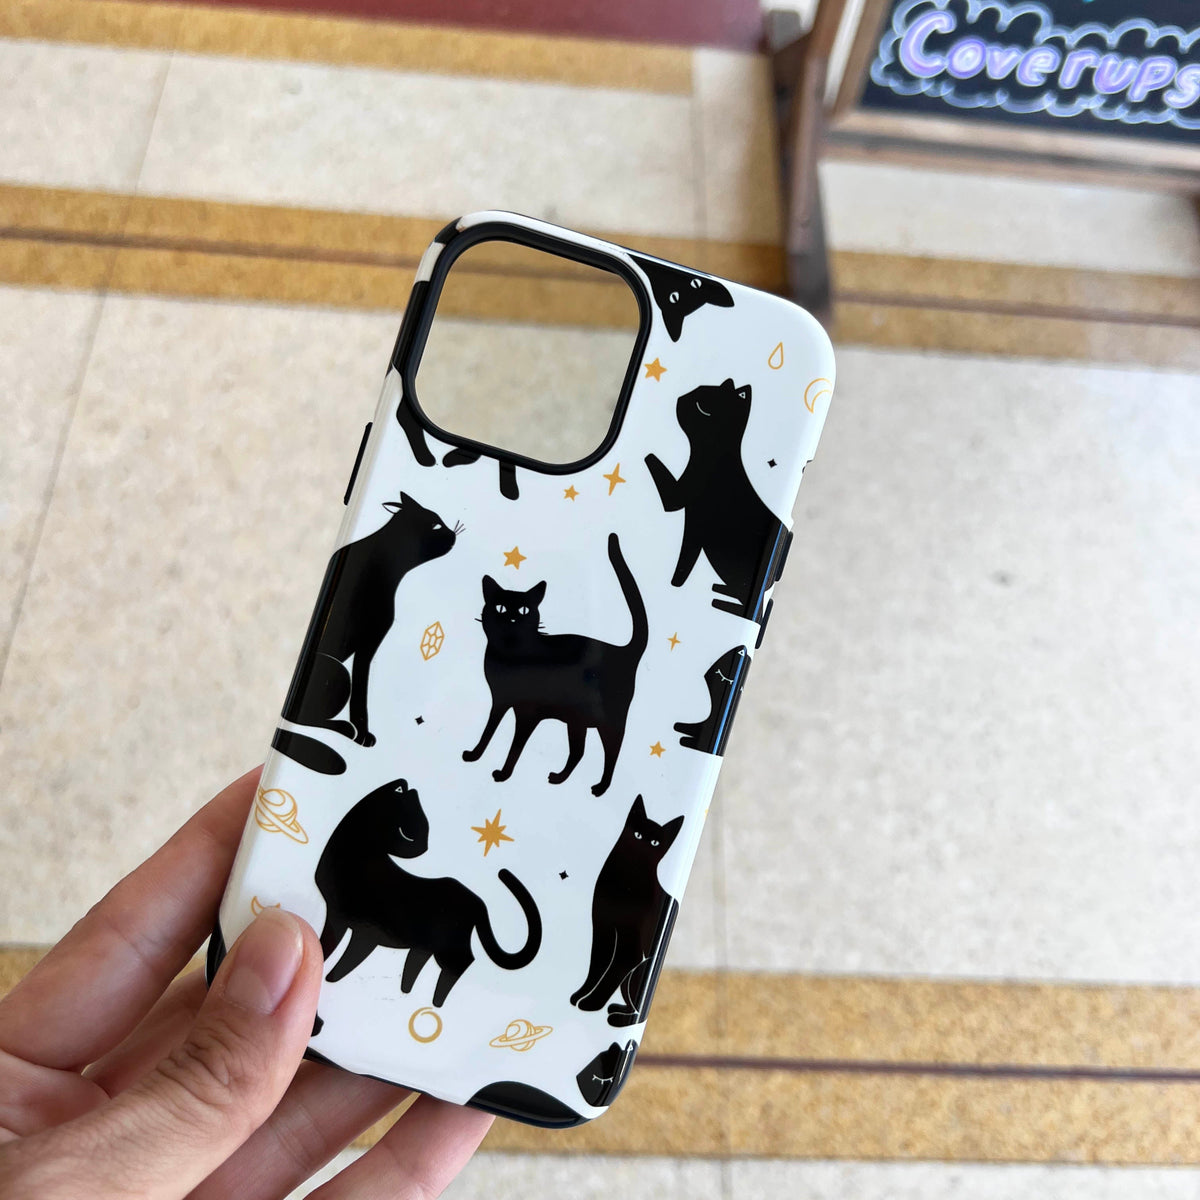 Black Cats iPhone Case